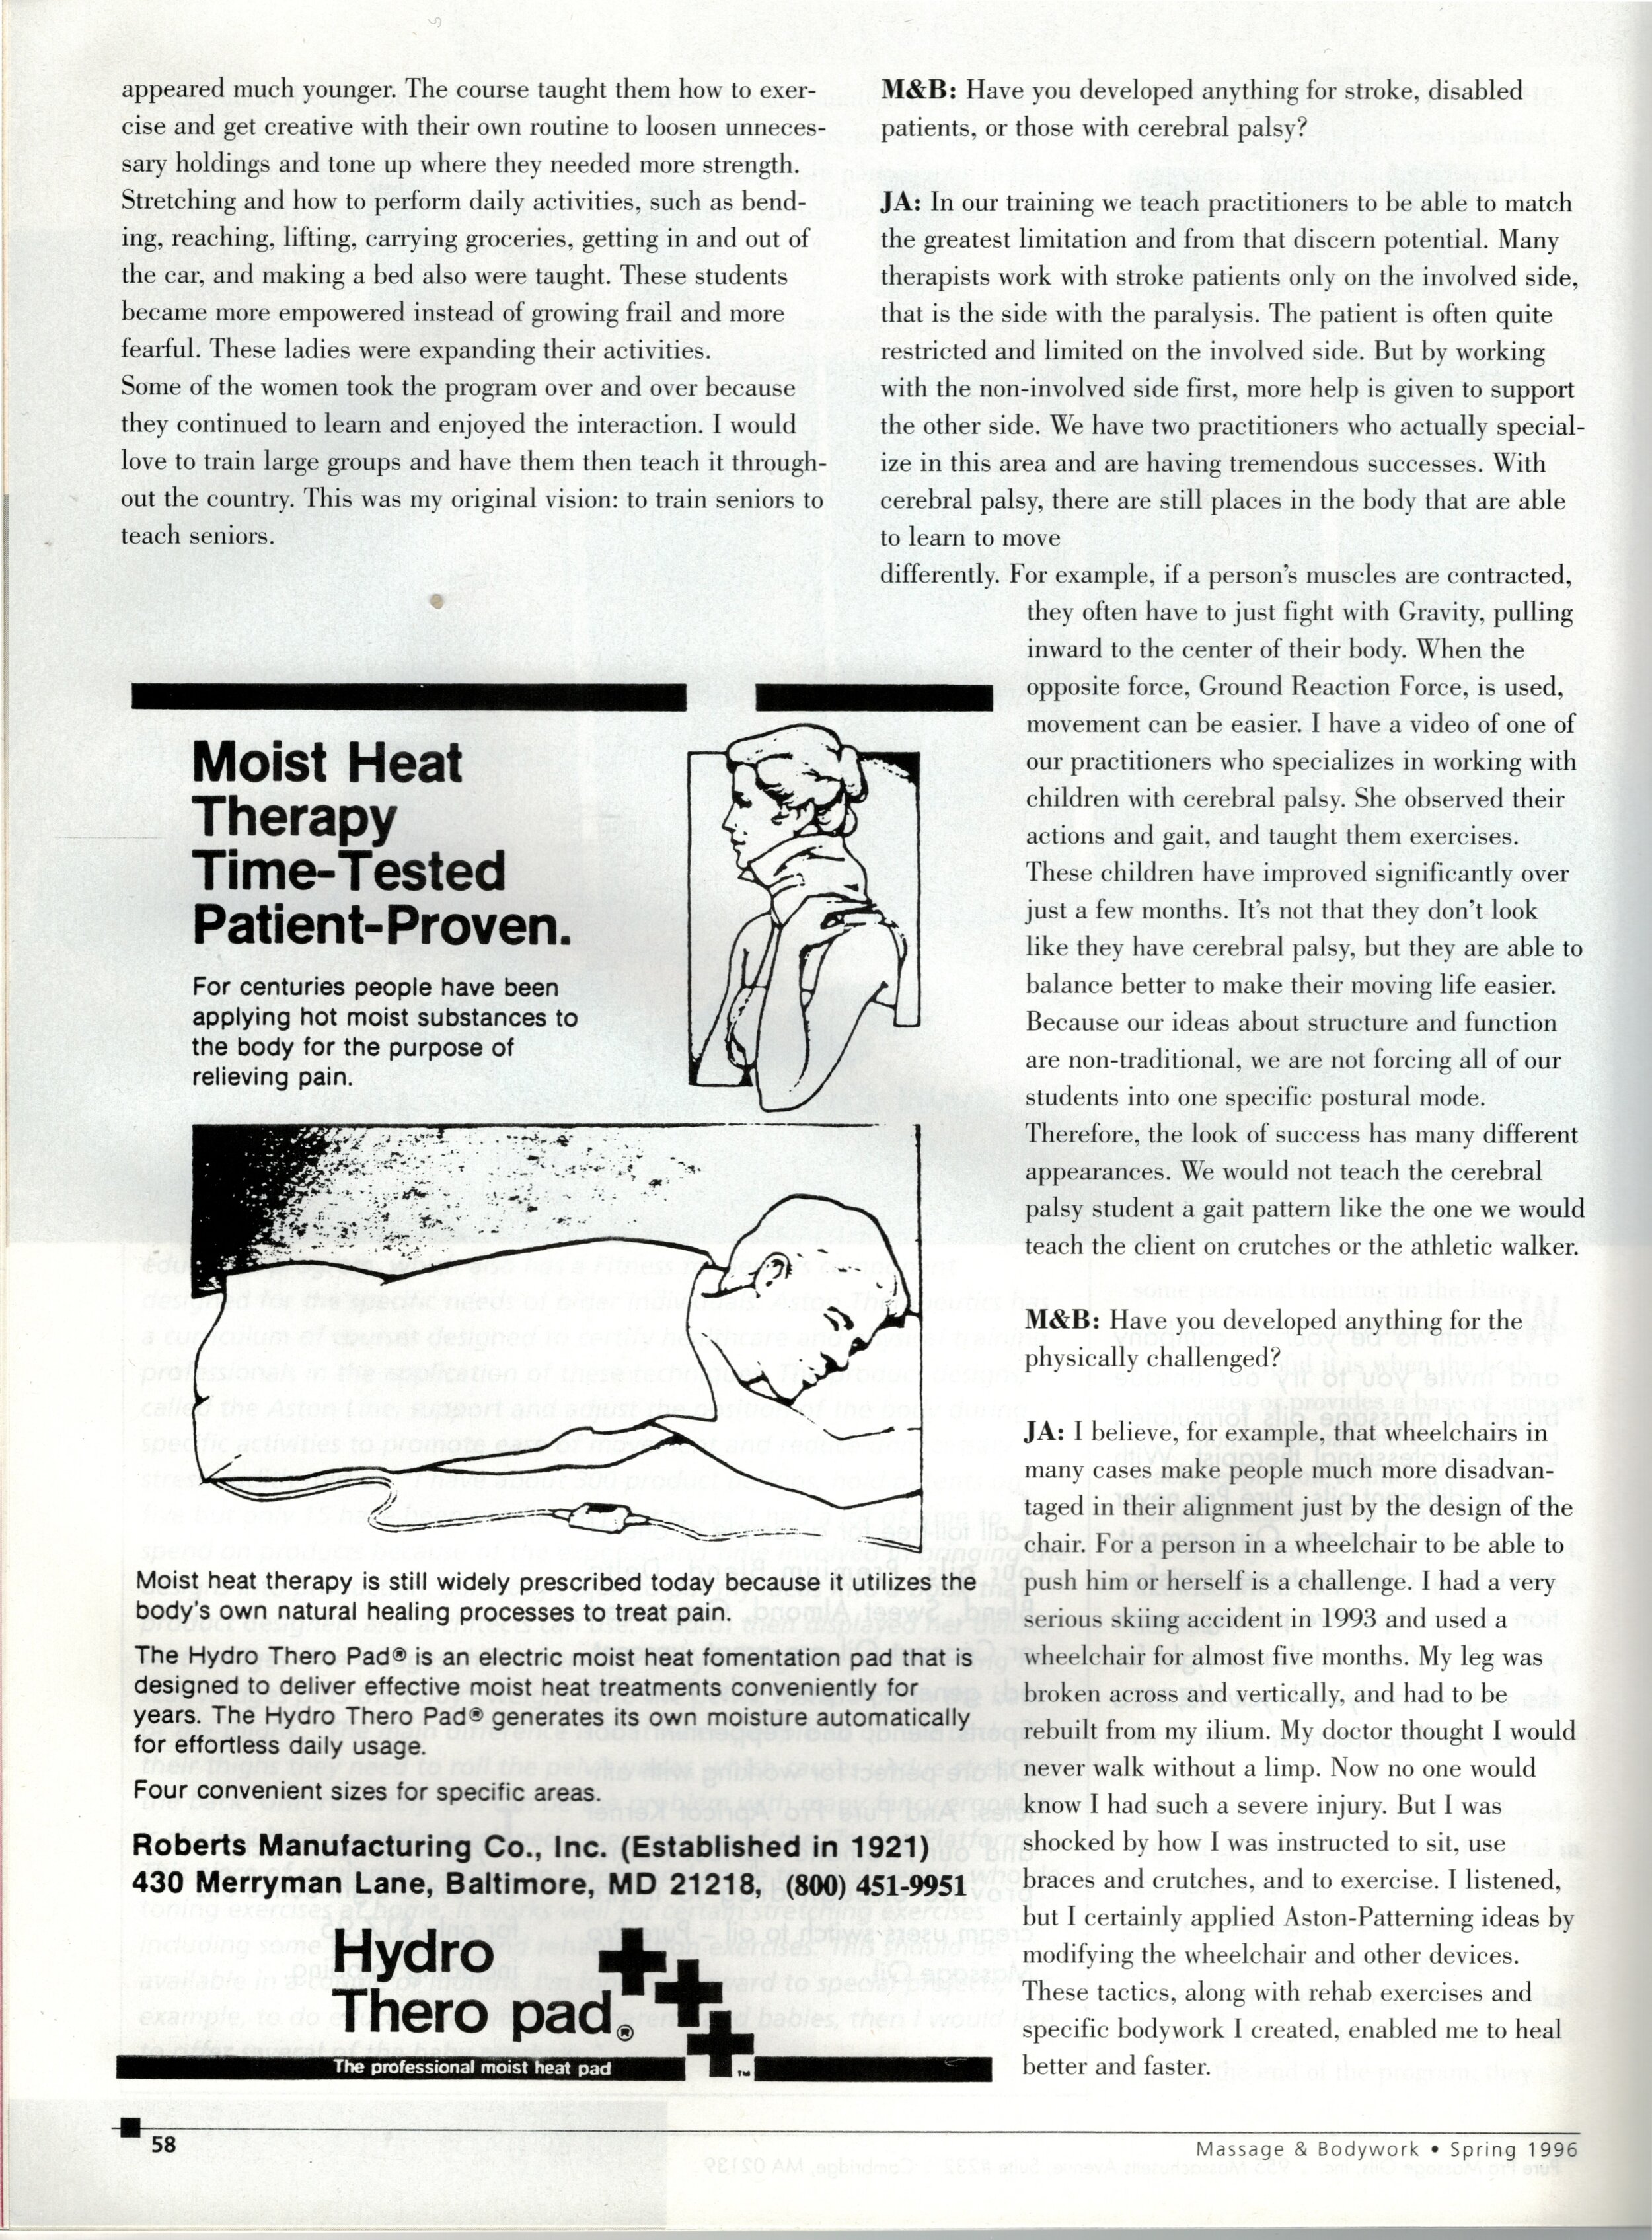 Massage & Bodywork 1996 - 6.jpeg